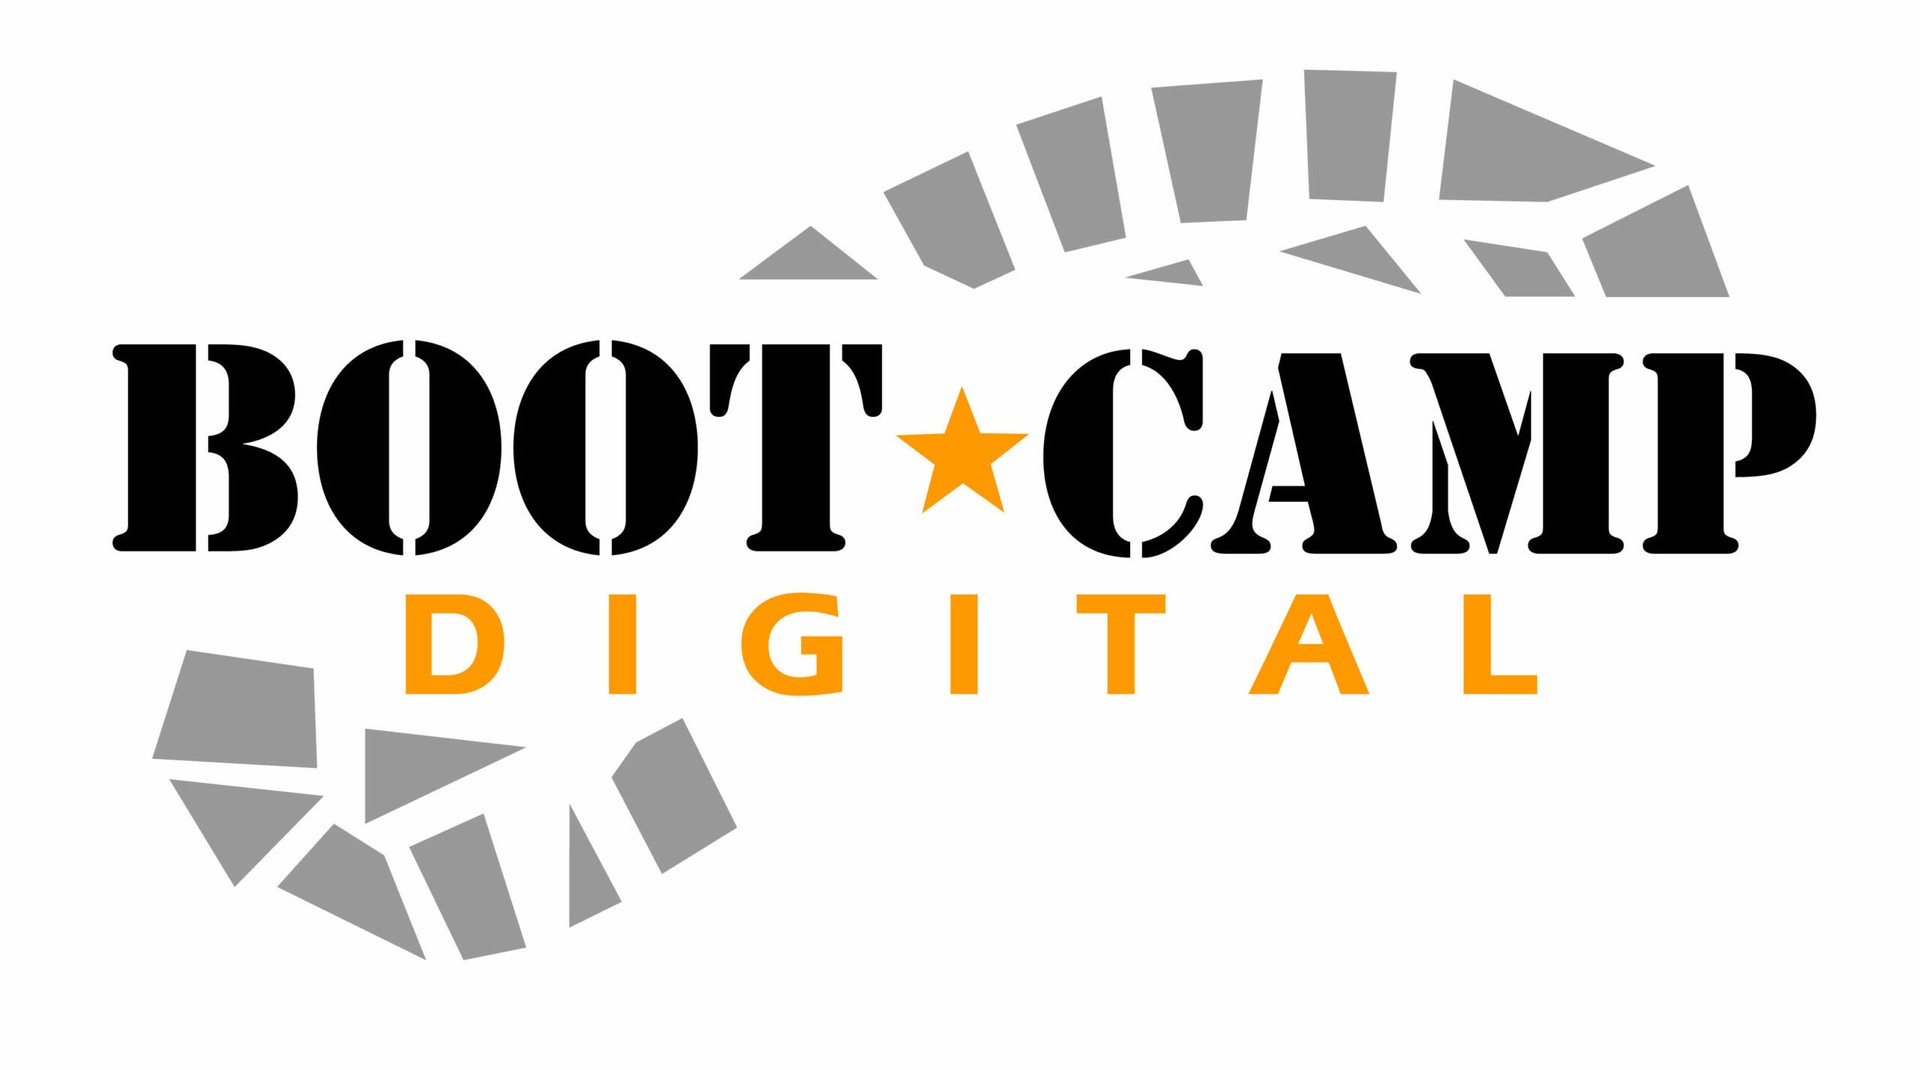 Digital marketing courses in Islamabad - Bootcamp logo